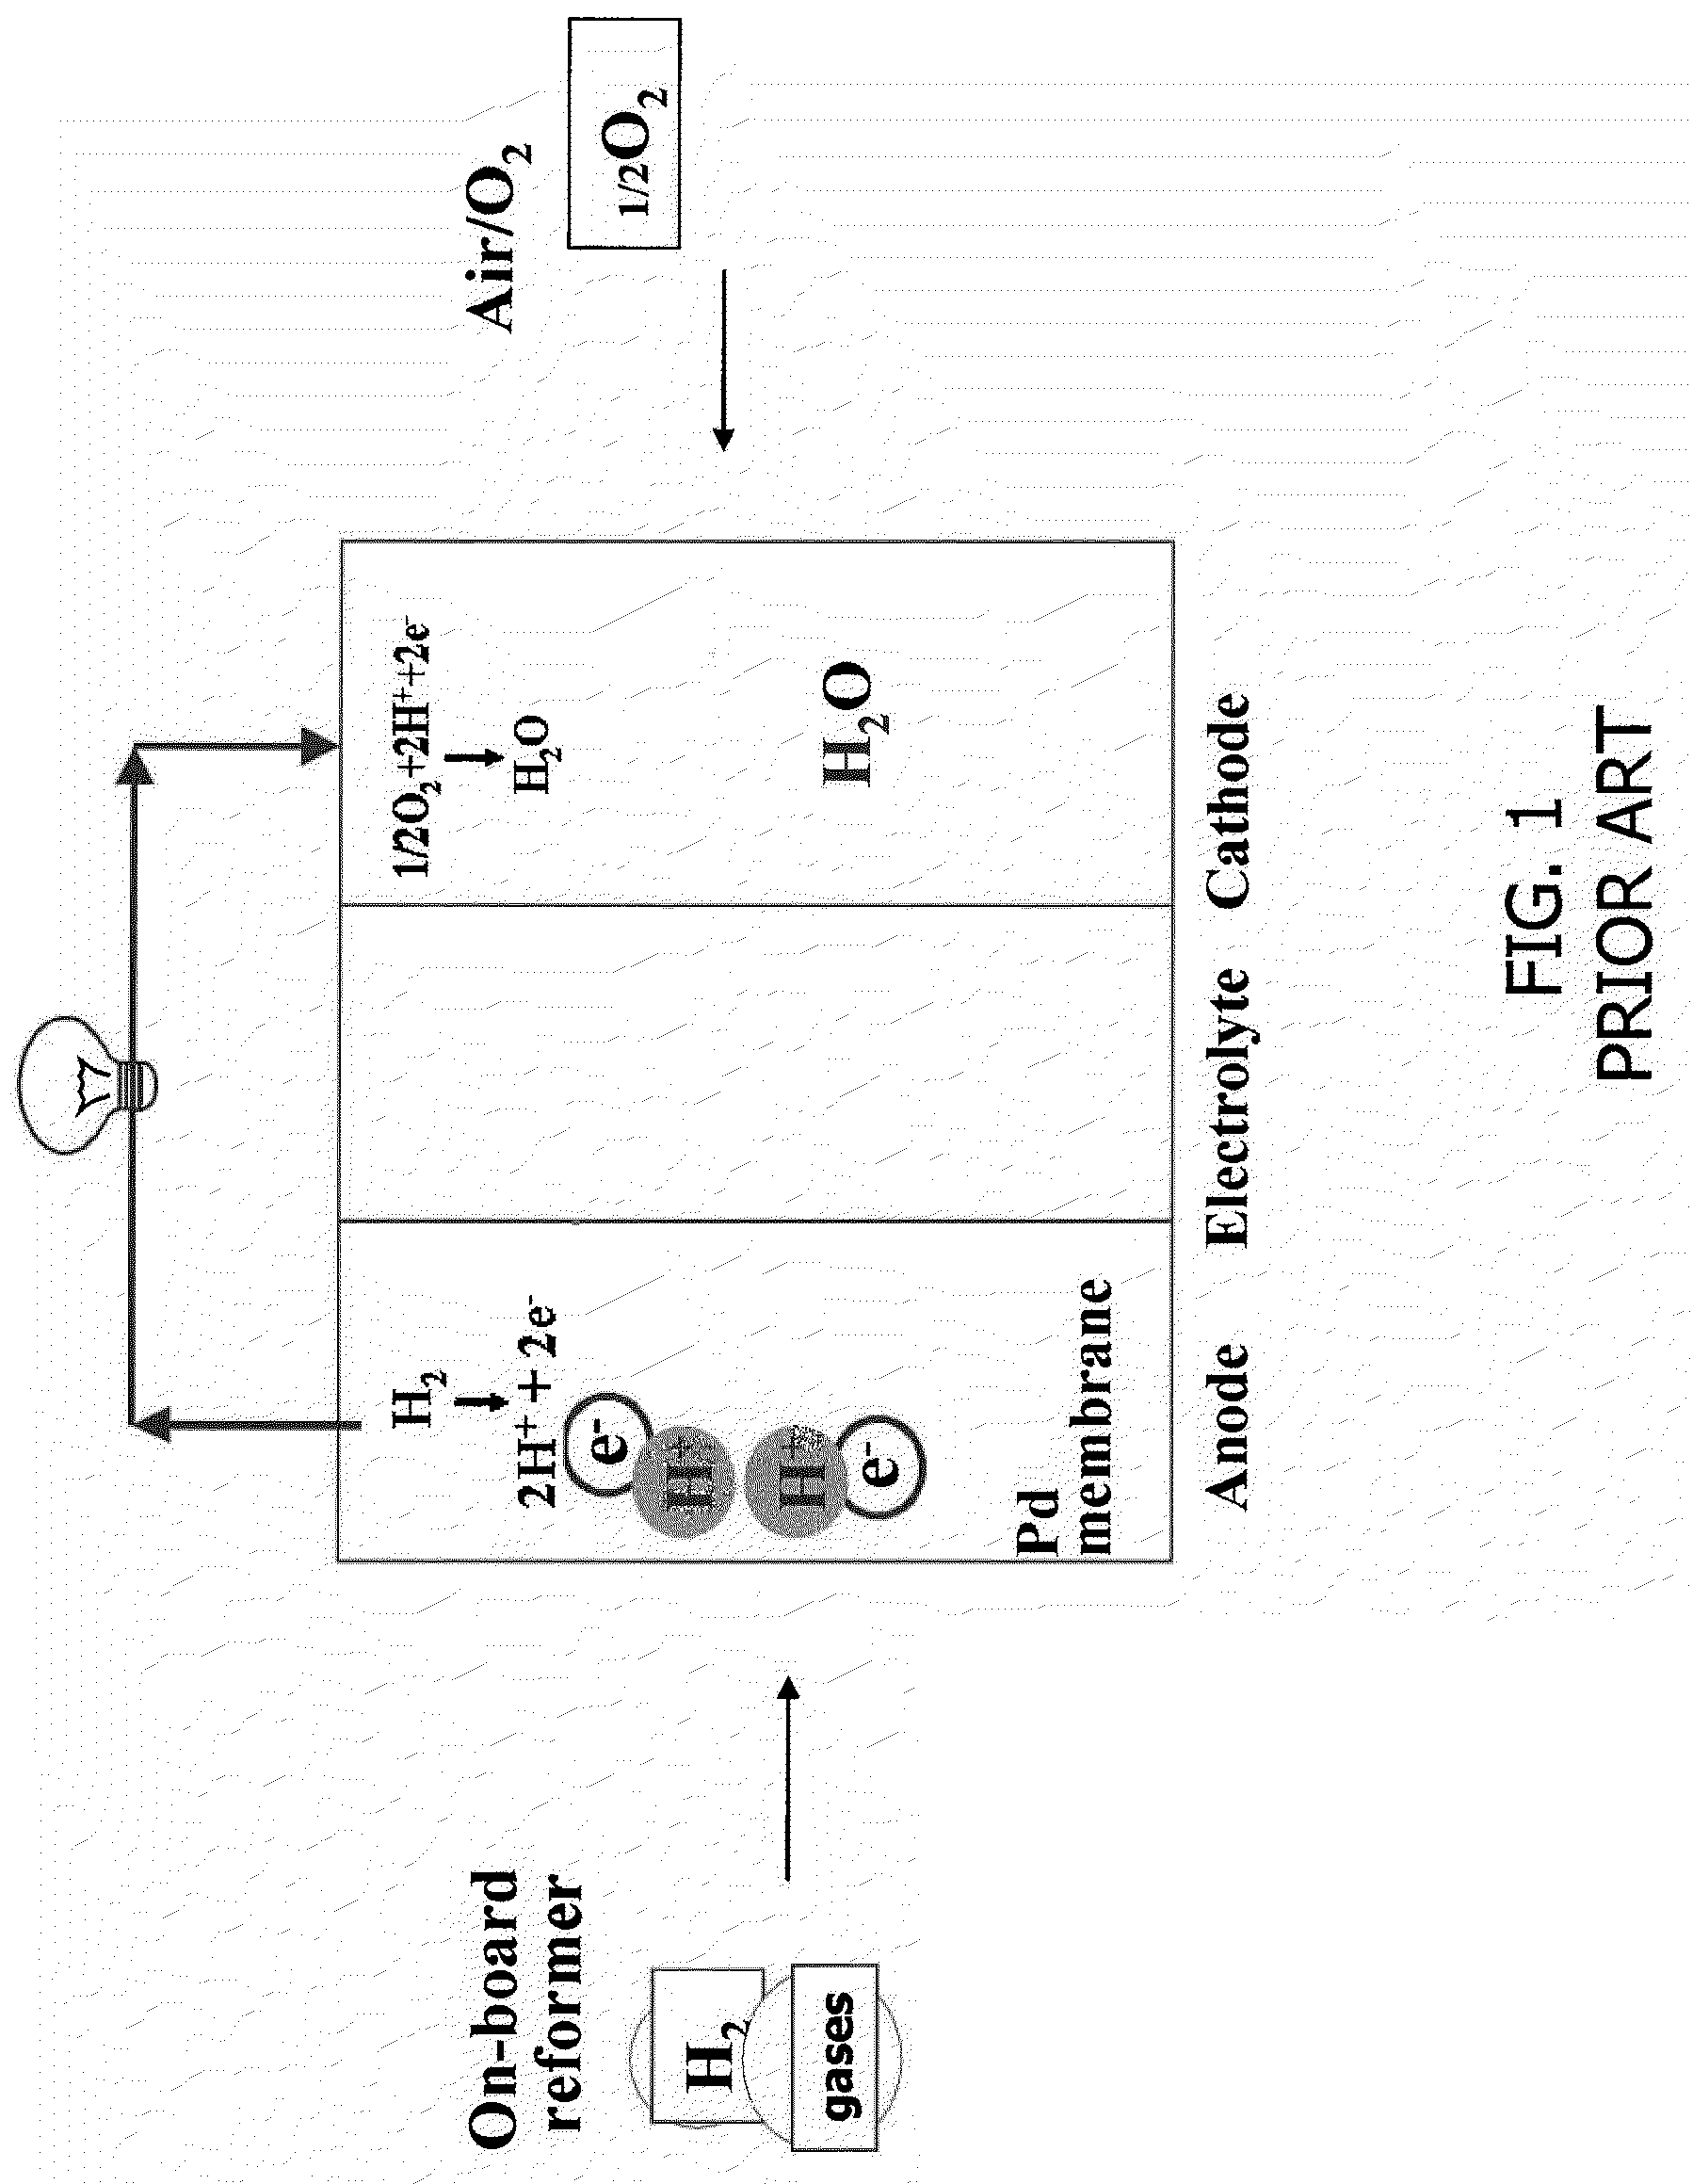 Ion-/proton-conducting apparatus and method